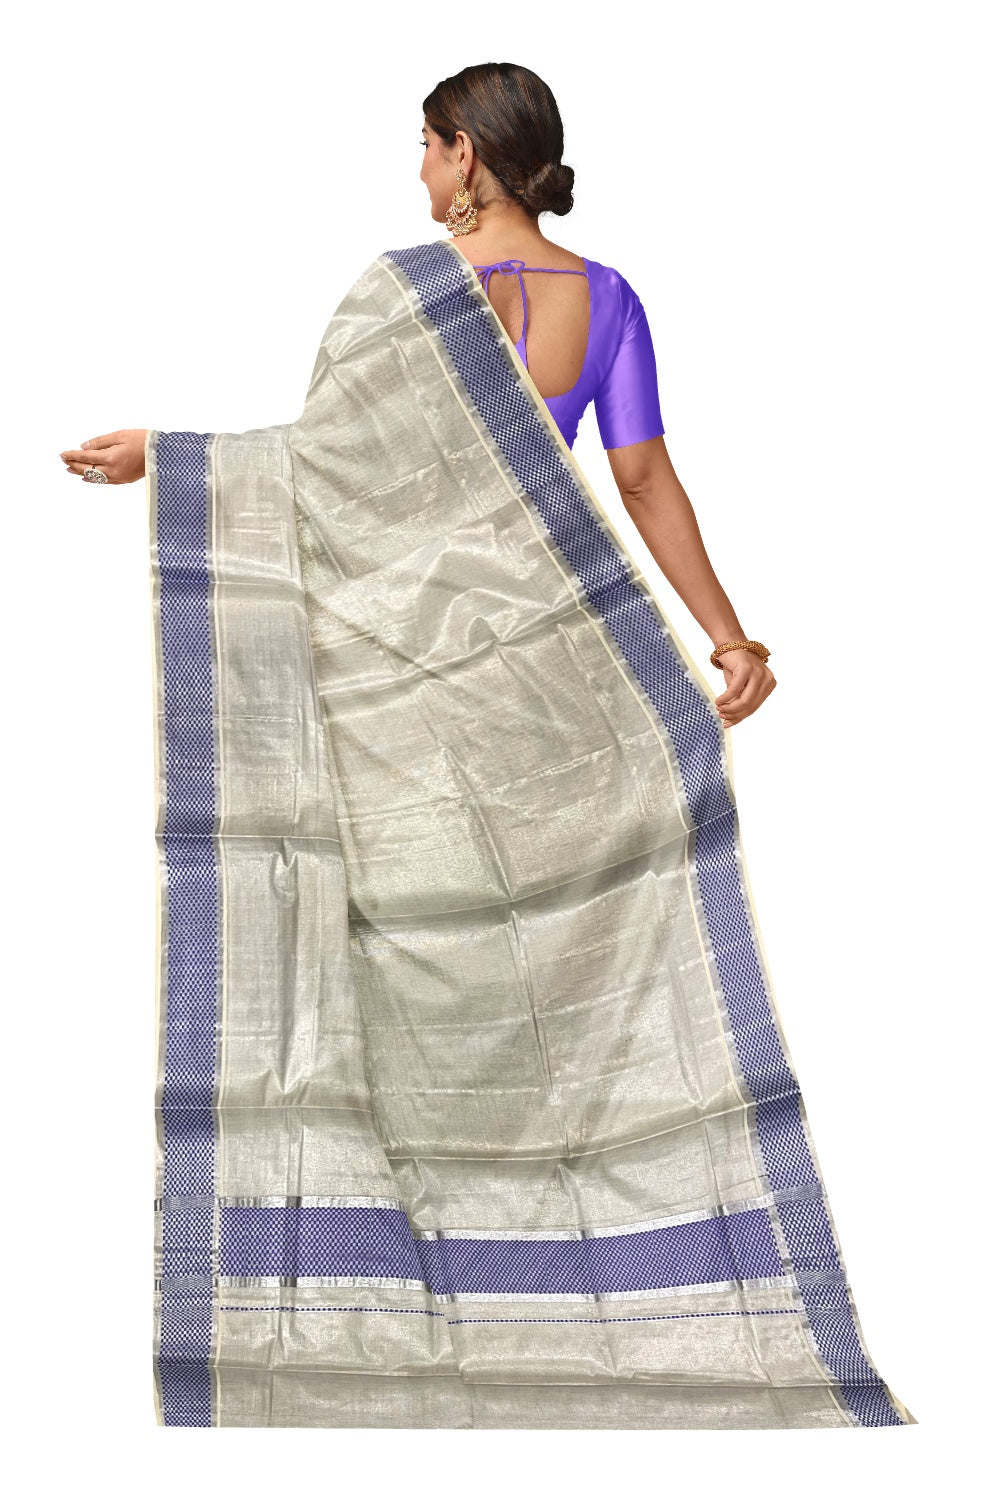 Kerala Silver Tissue Kasavu Saree with Violet Paa Neythu Border